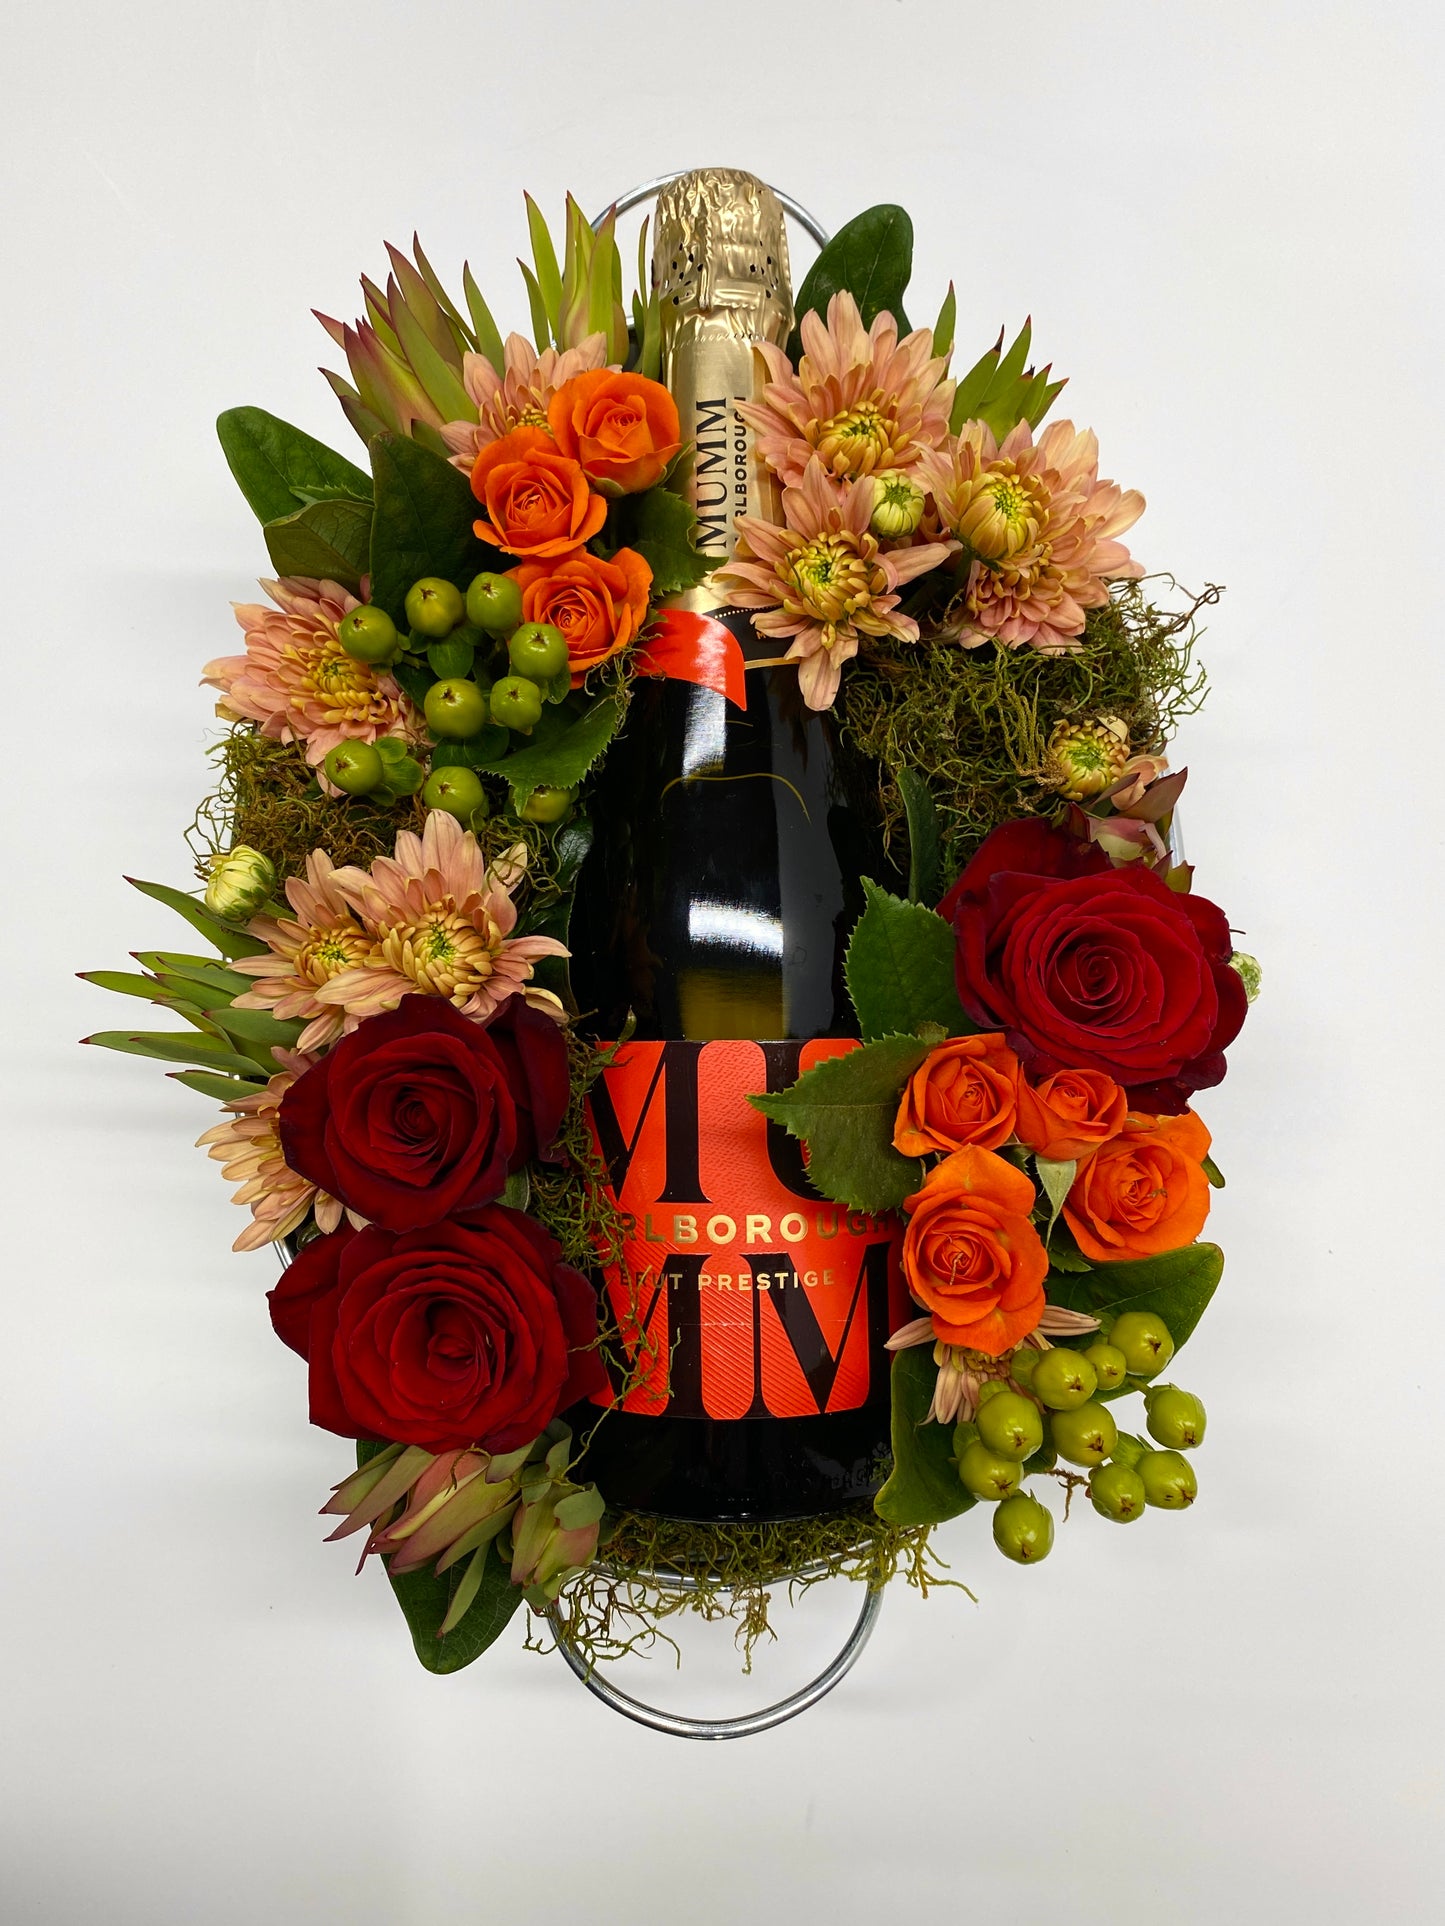 Mumm Marlborough Brut Prestige with Deluxe Floral Arrangement